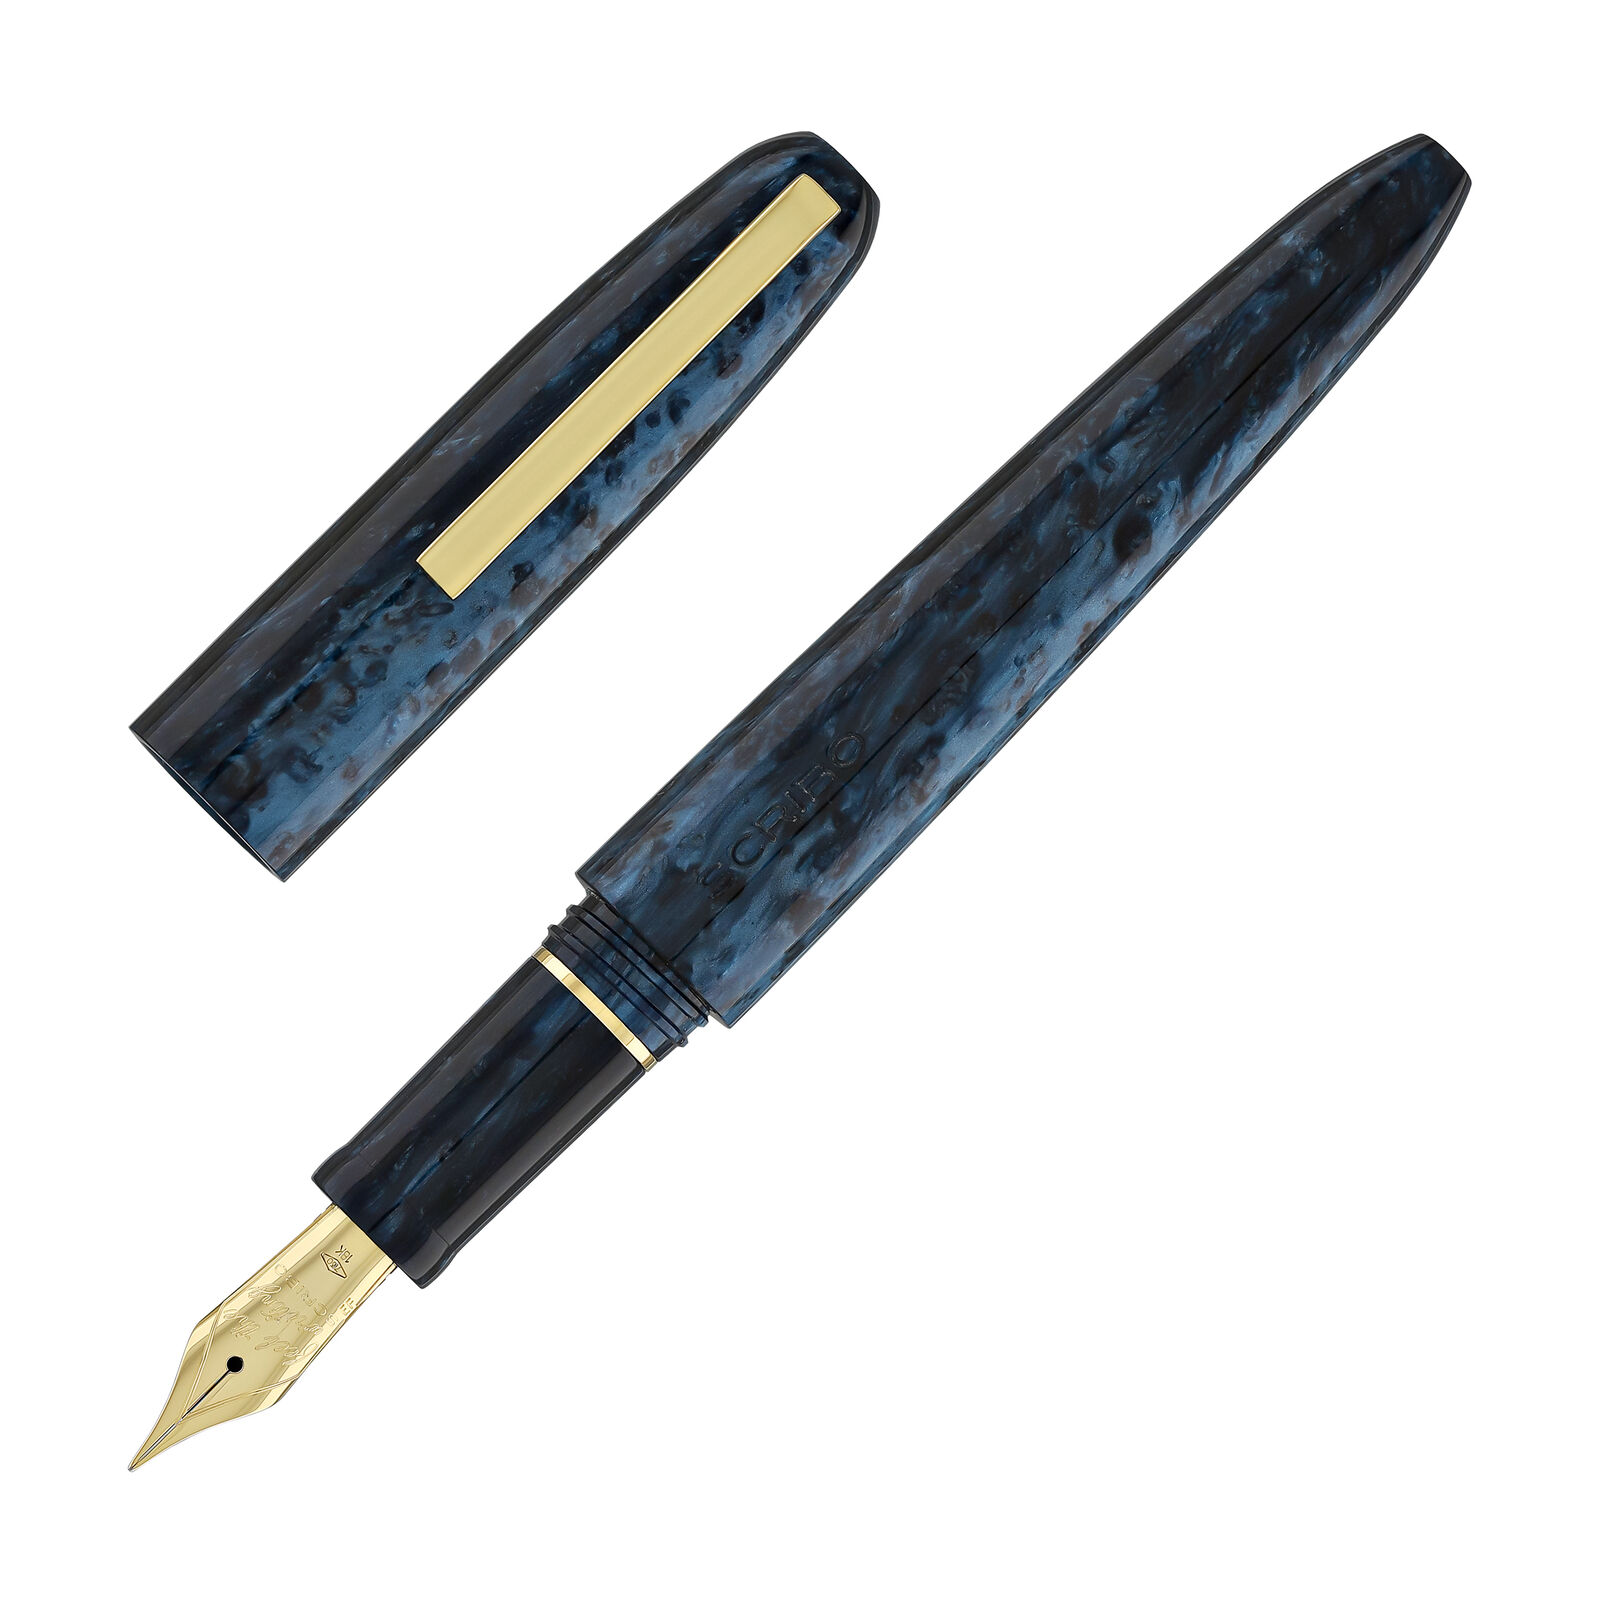 Scribo Piuma Fountain Pen in Agata 14K Flexible Gold Nib - Extra Fine Point -NEW